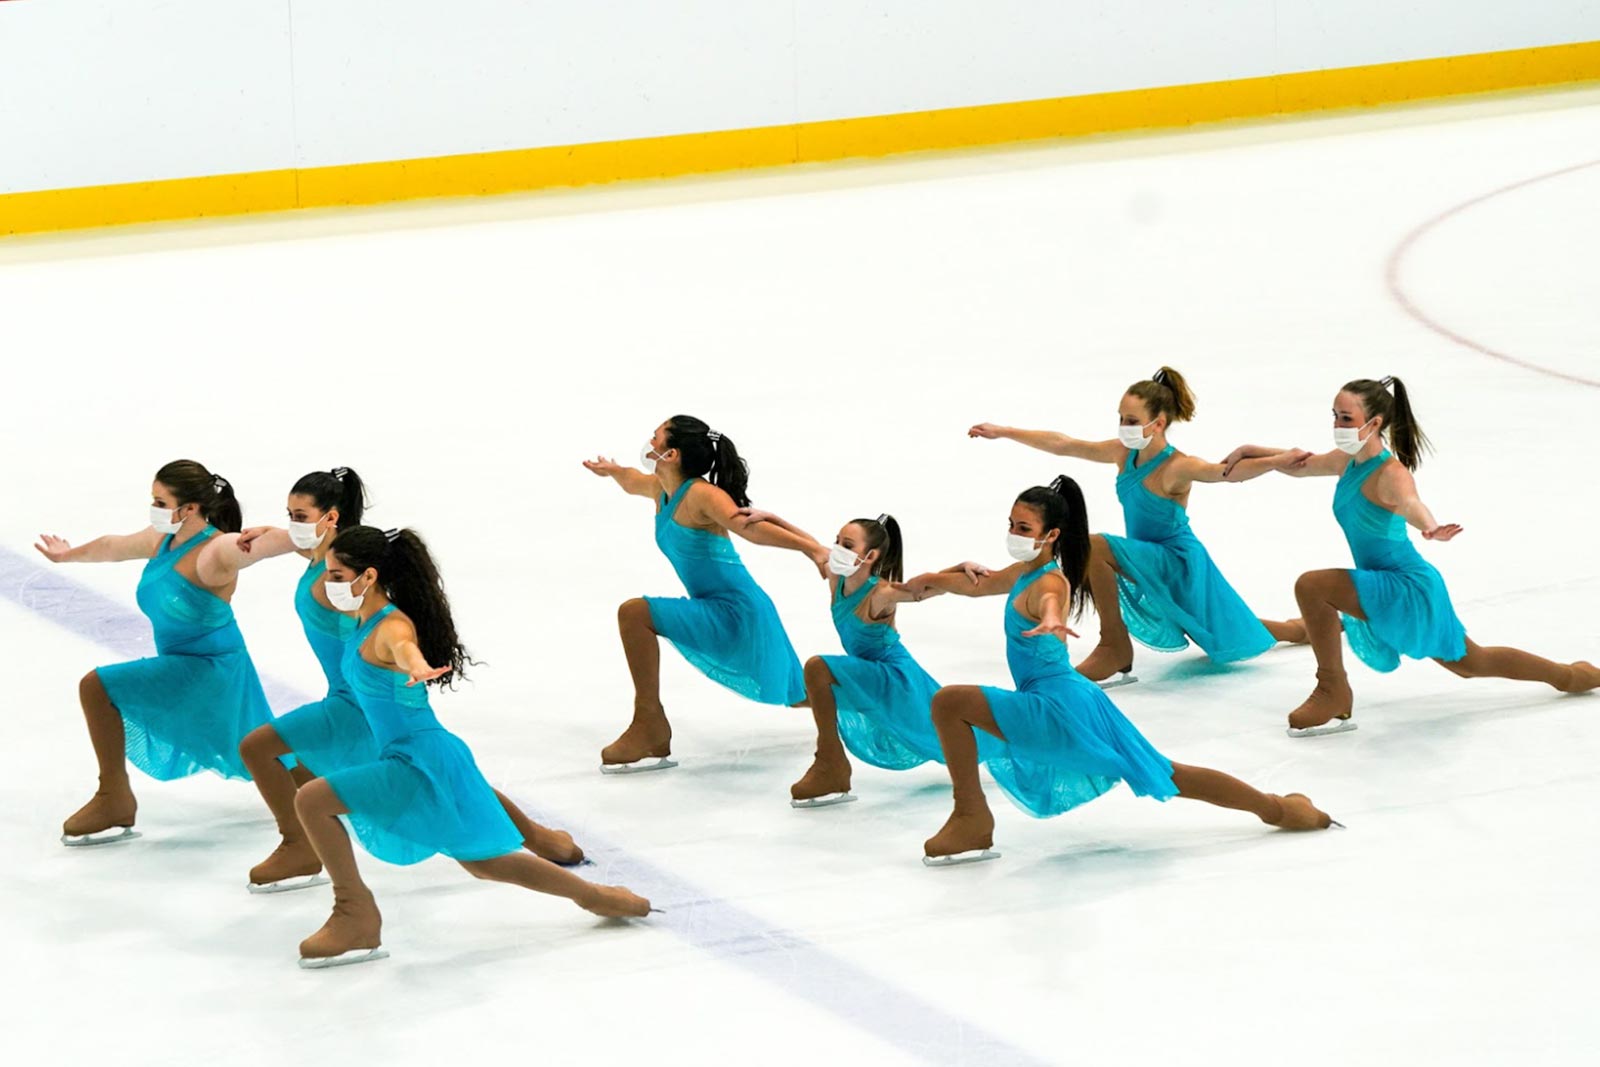 Synchronized figure skaters in green dresses.